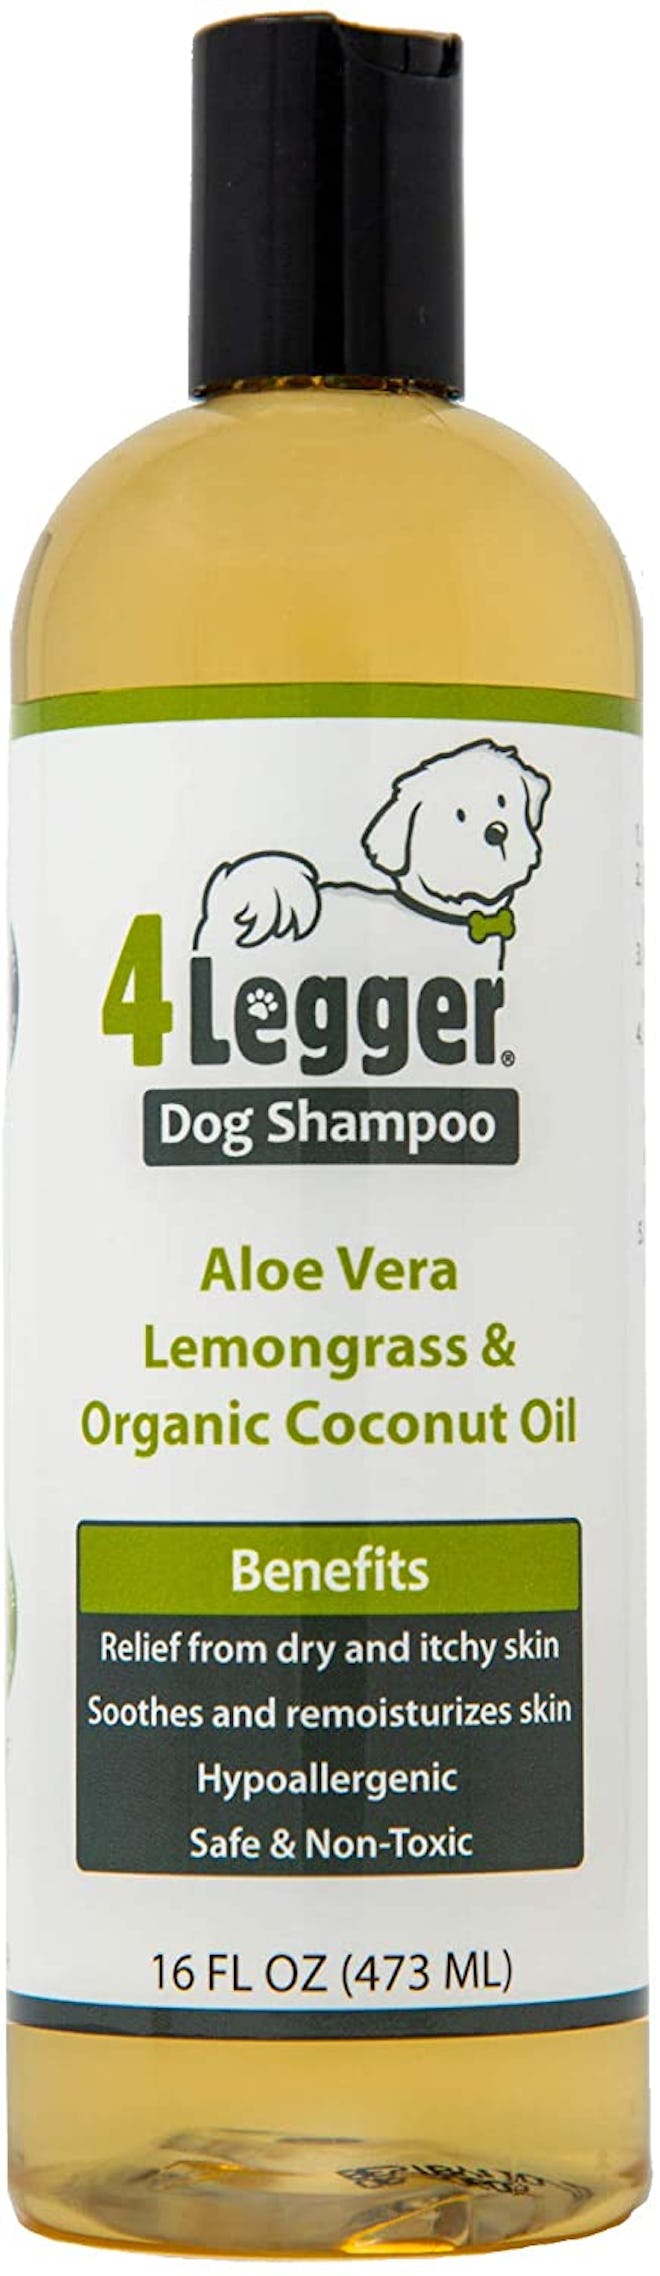  4Legger Dog Shampoo